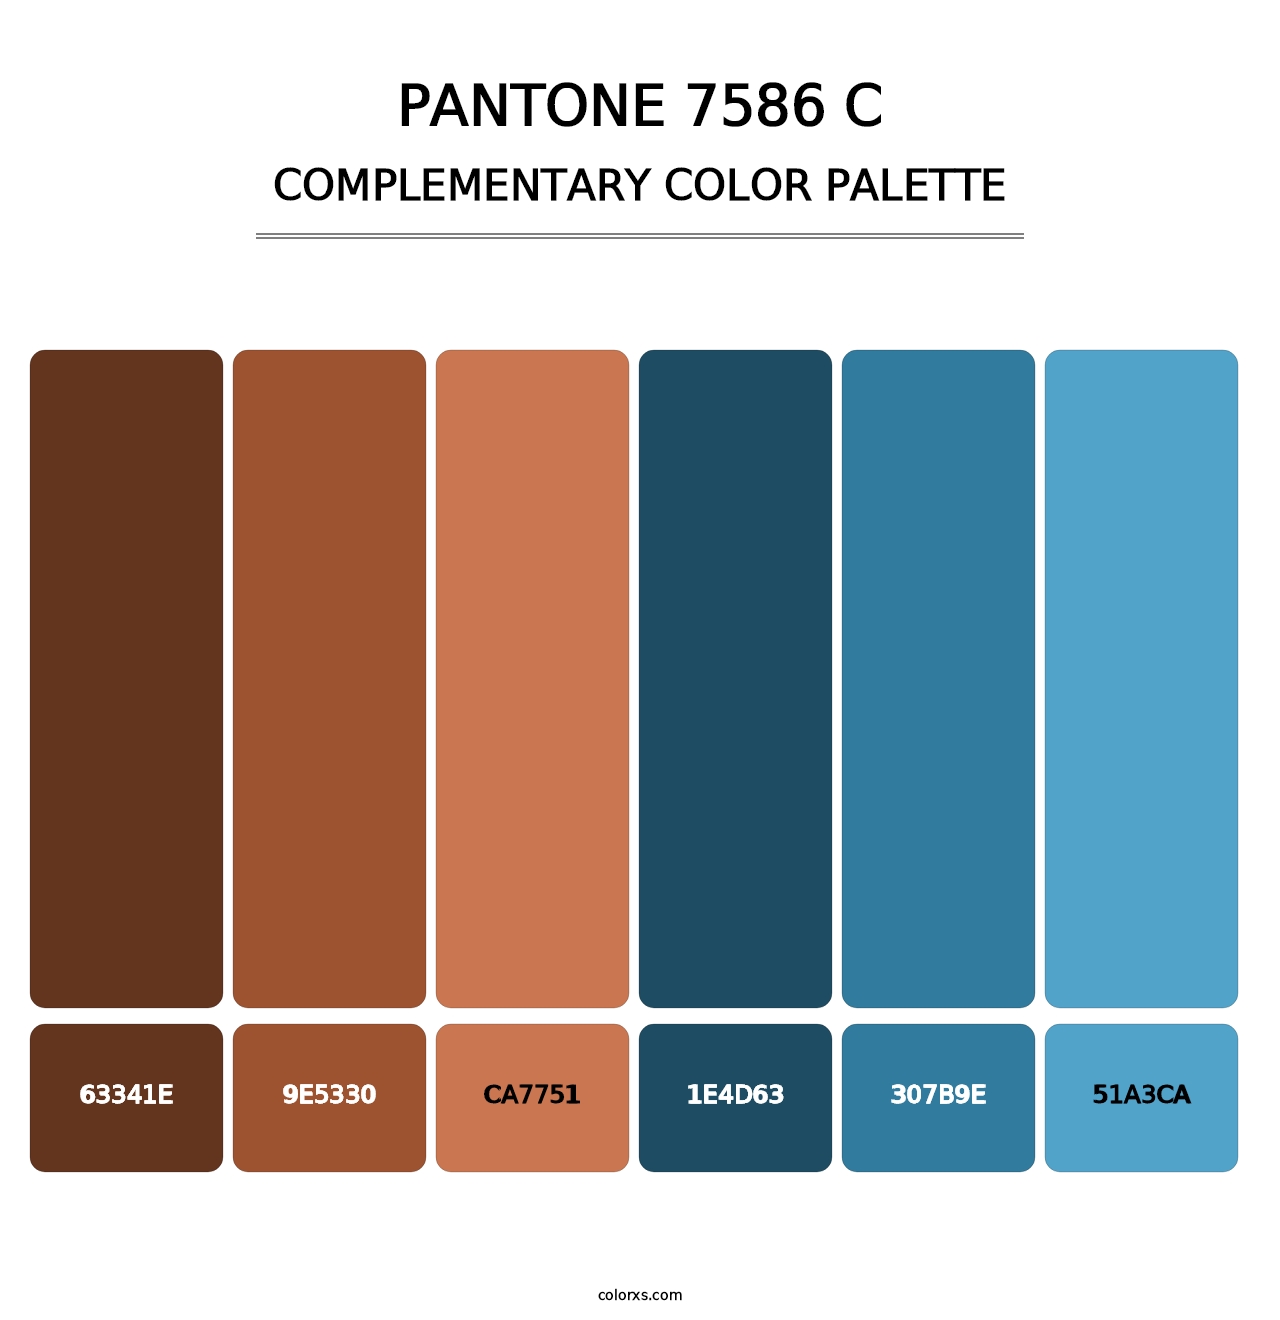 PANTONE 7586 C - Complementary Color Palette